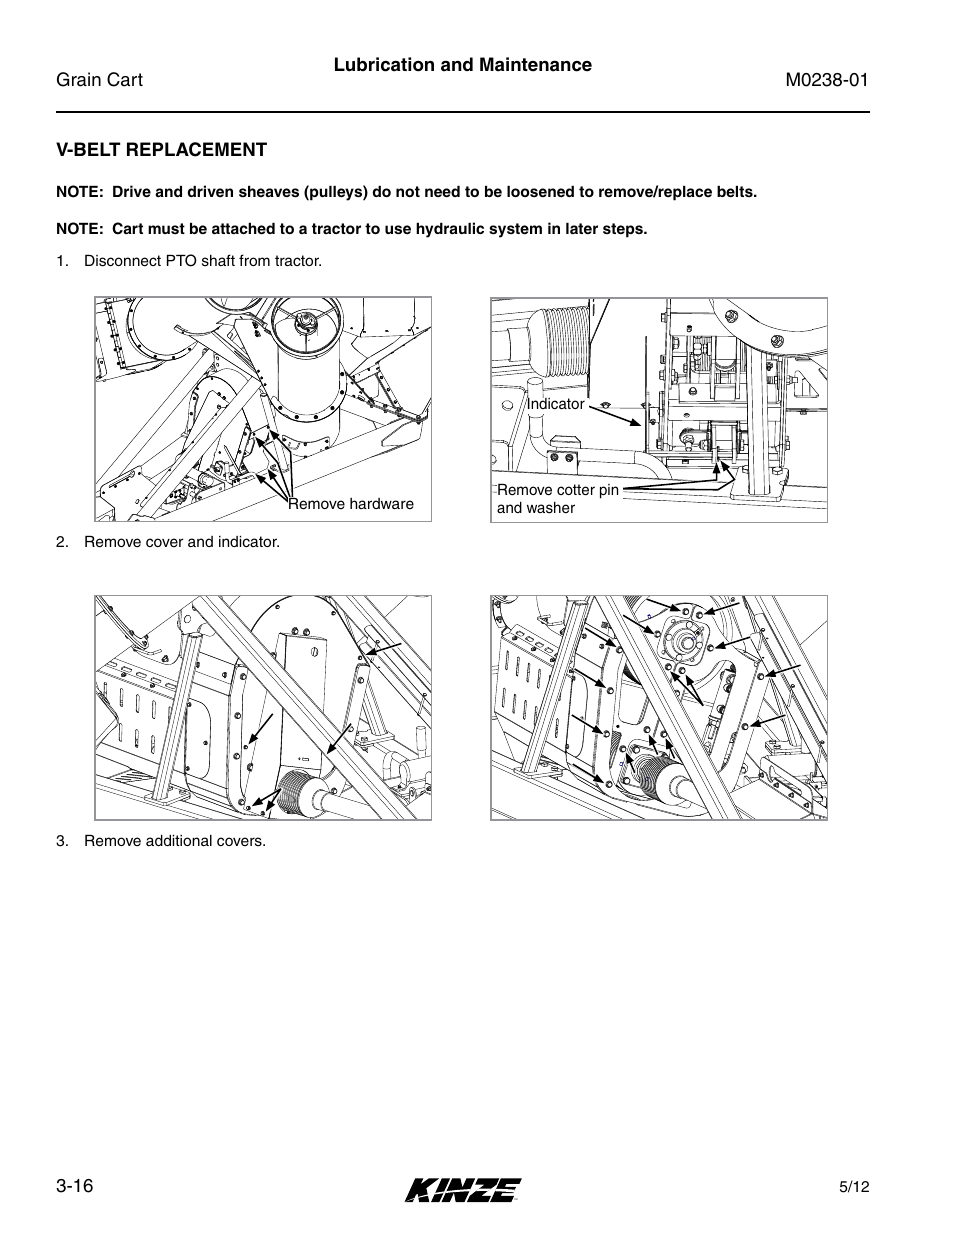 V-belt replacement, V-belt replacement -16 | Kinze Grain Carts Rev. 7/14 User Manual | Page 52 / 70